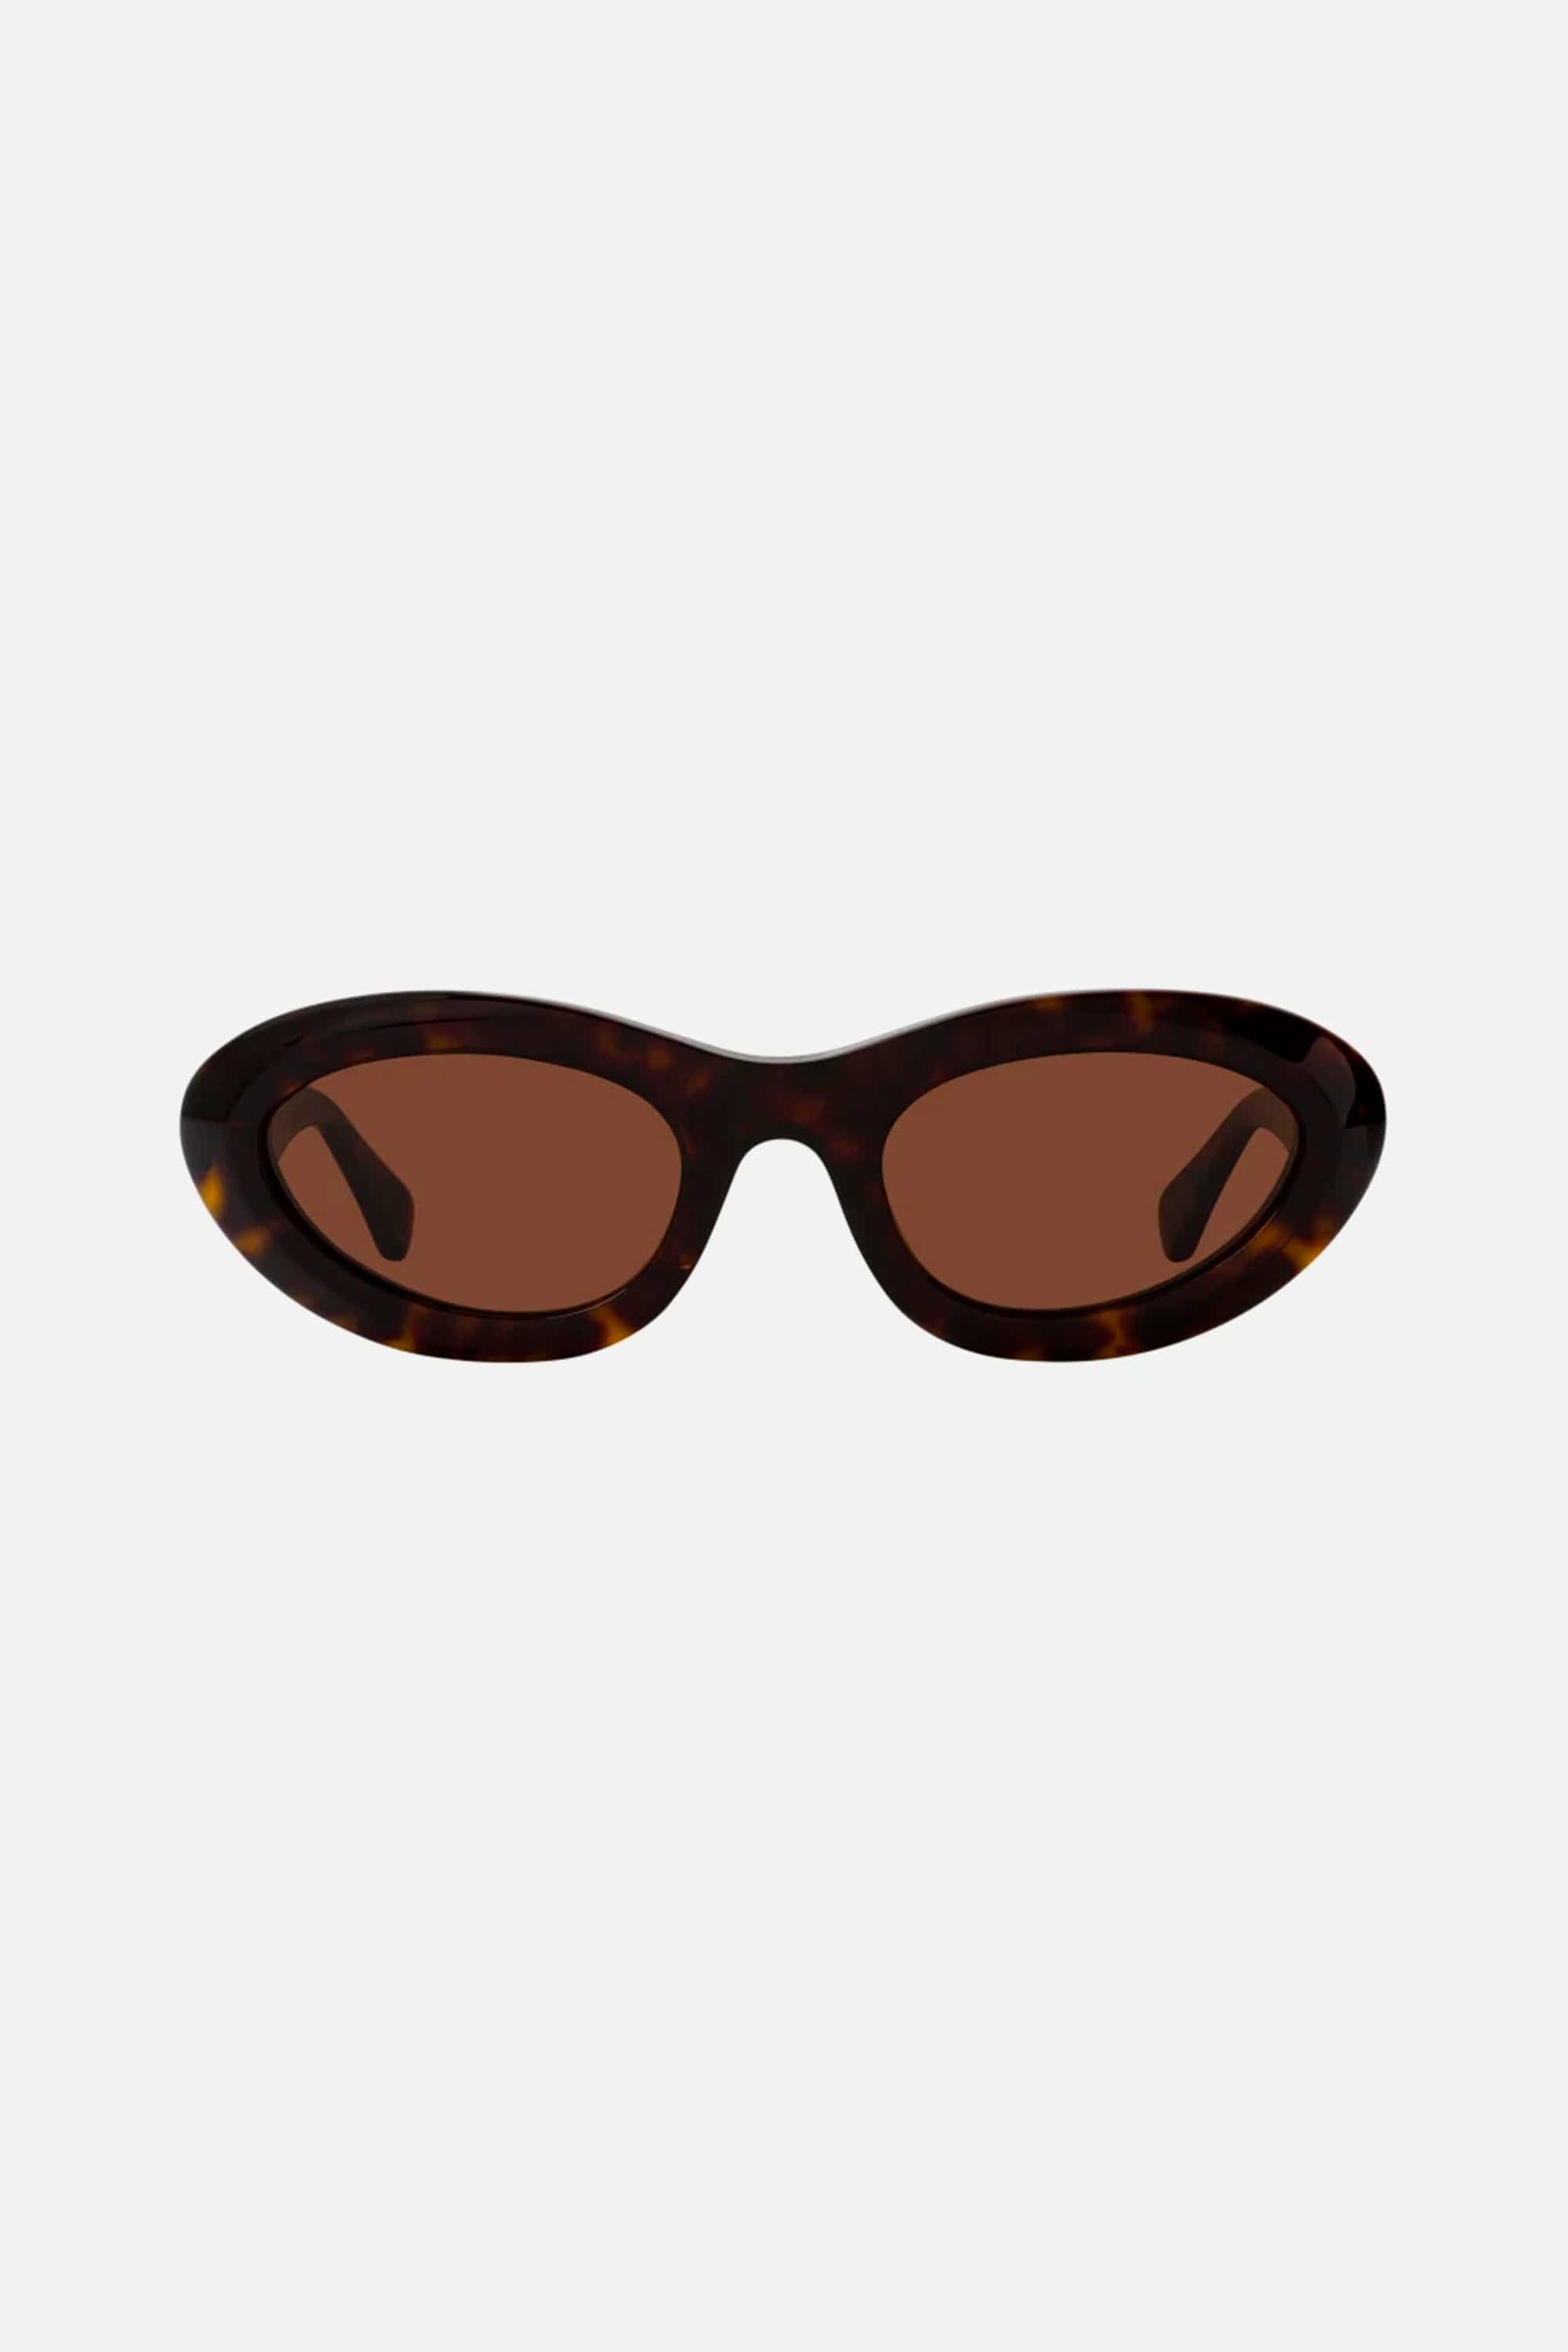 Bottega Veneta bold oval havana sunglasses - Eyewear Club